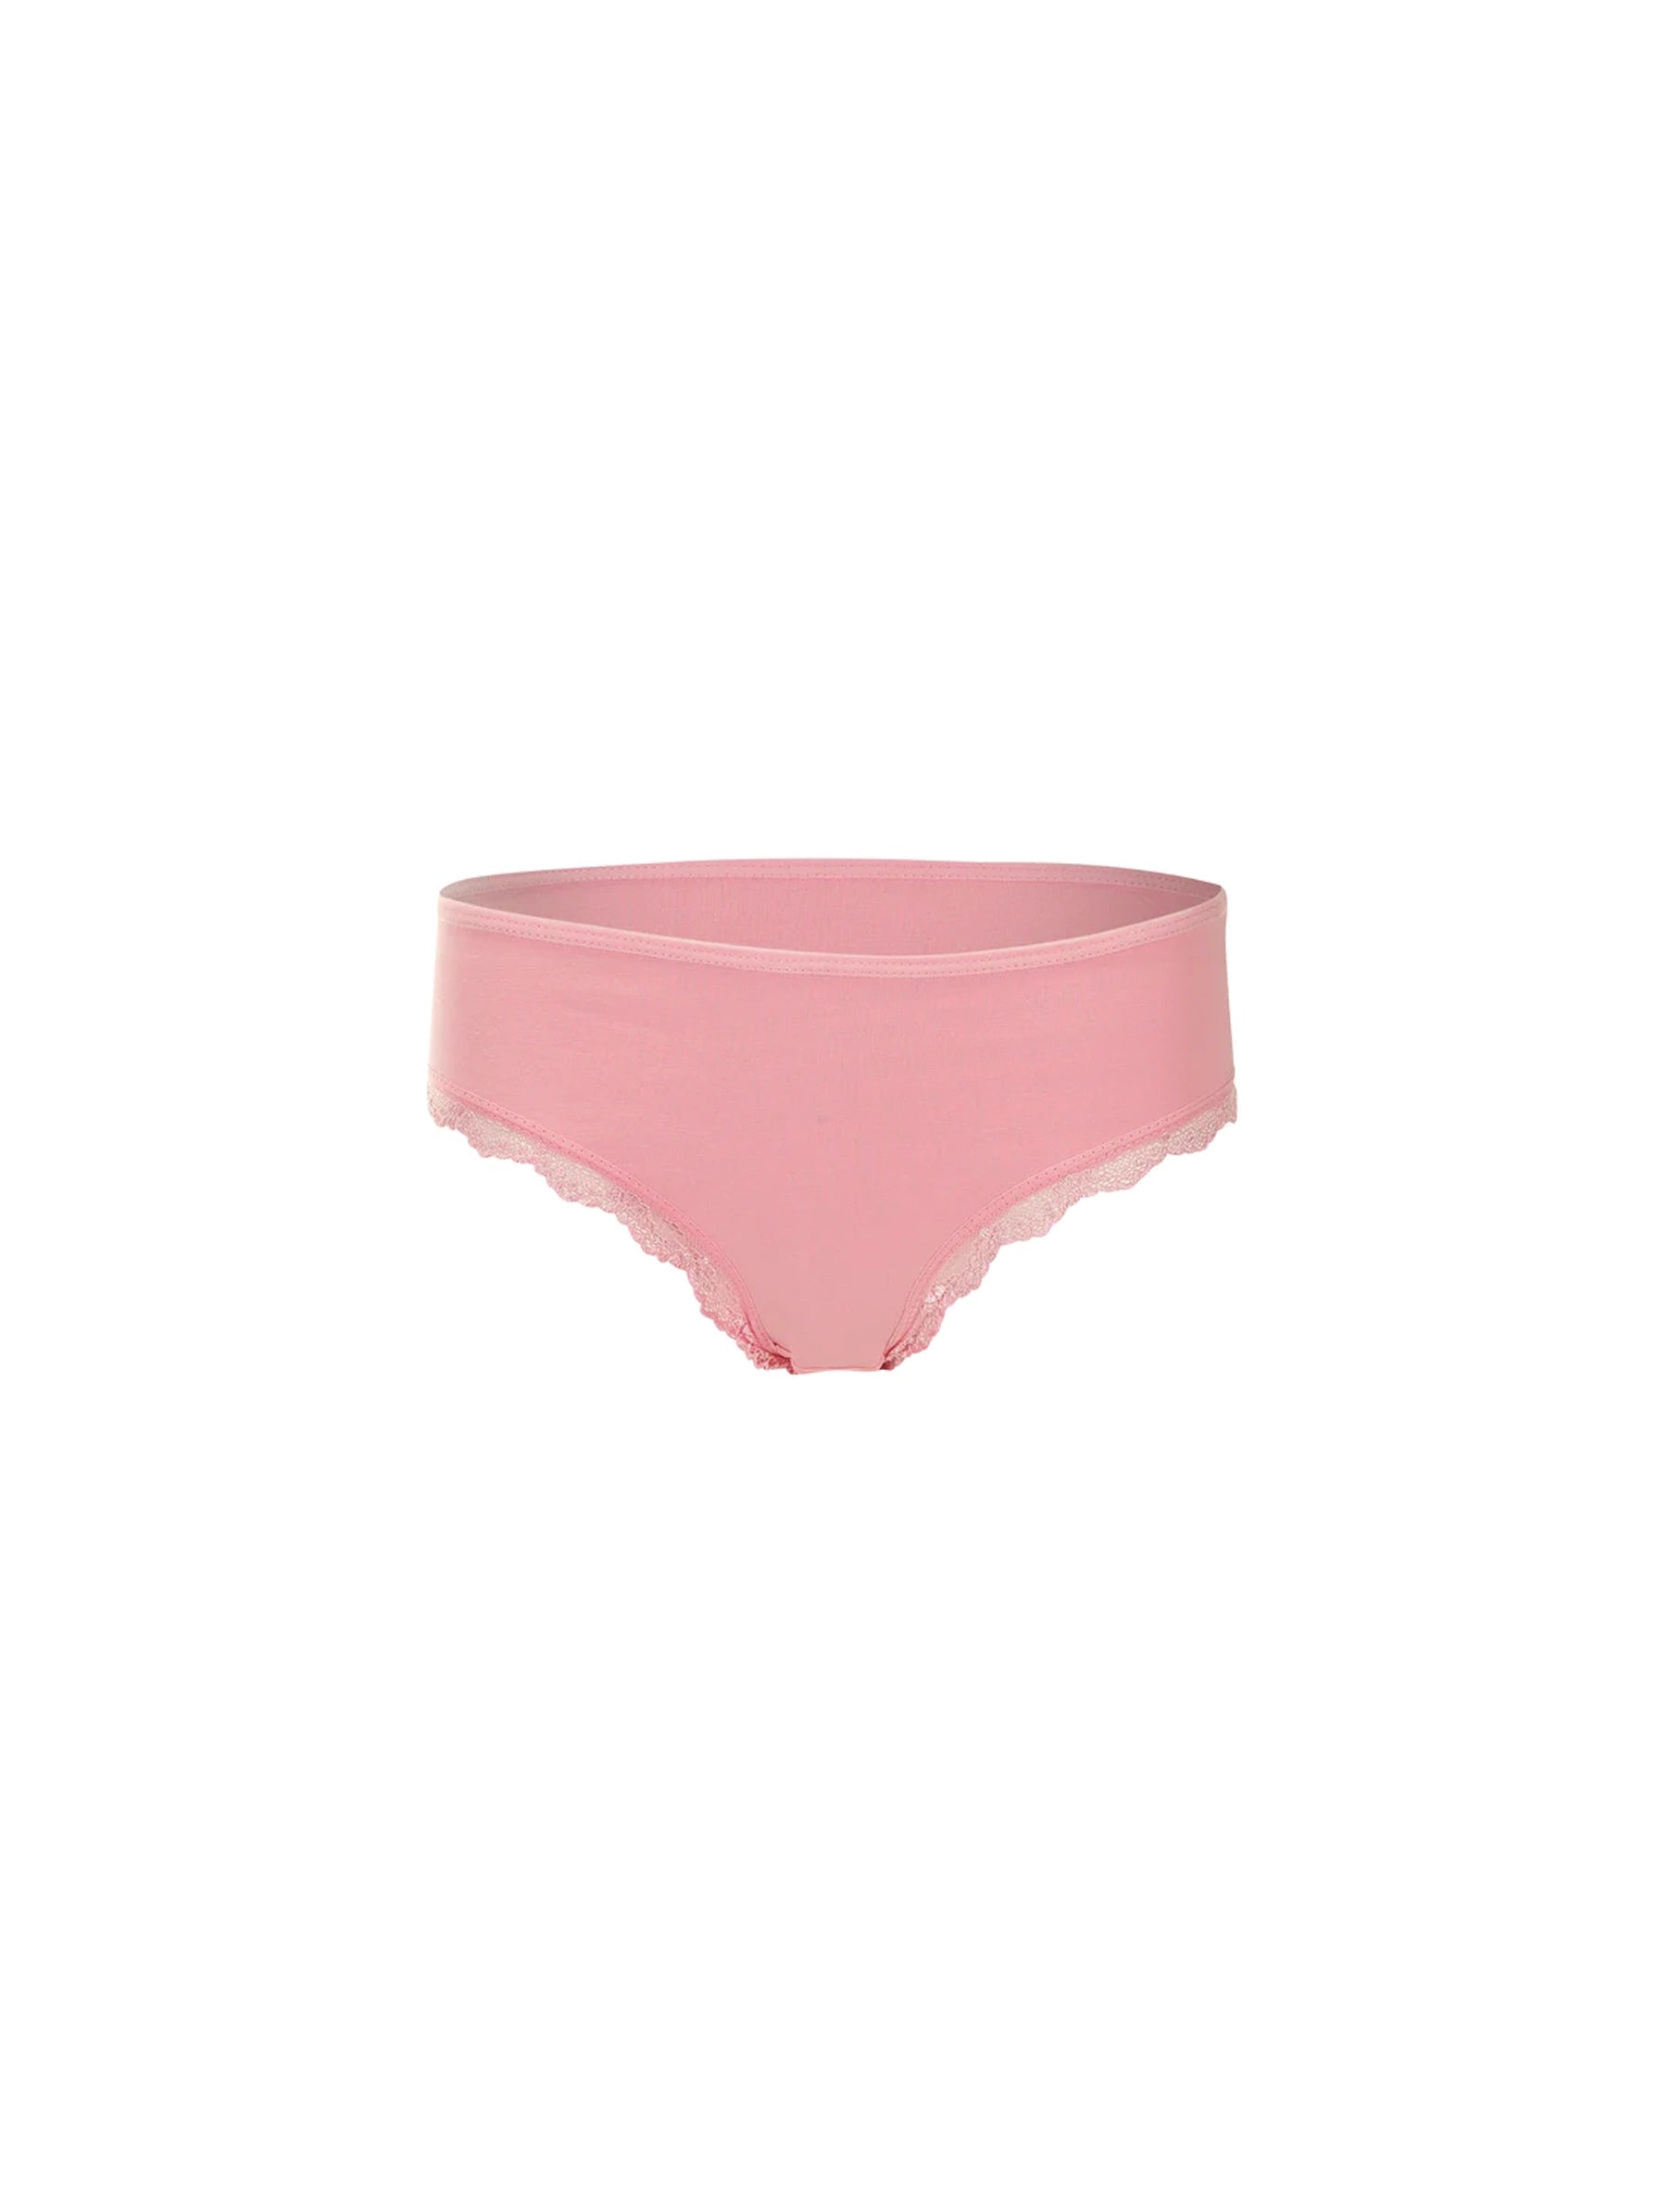 Pink Lace Underwear - Pink Lace & Cotton Knickers, Pink Underwear